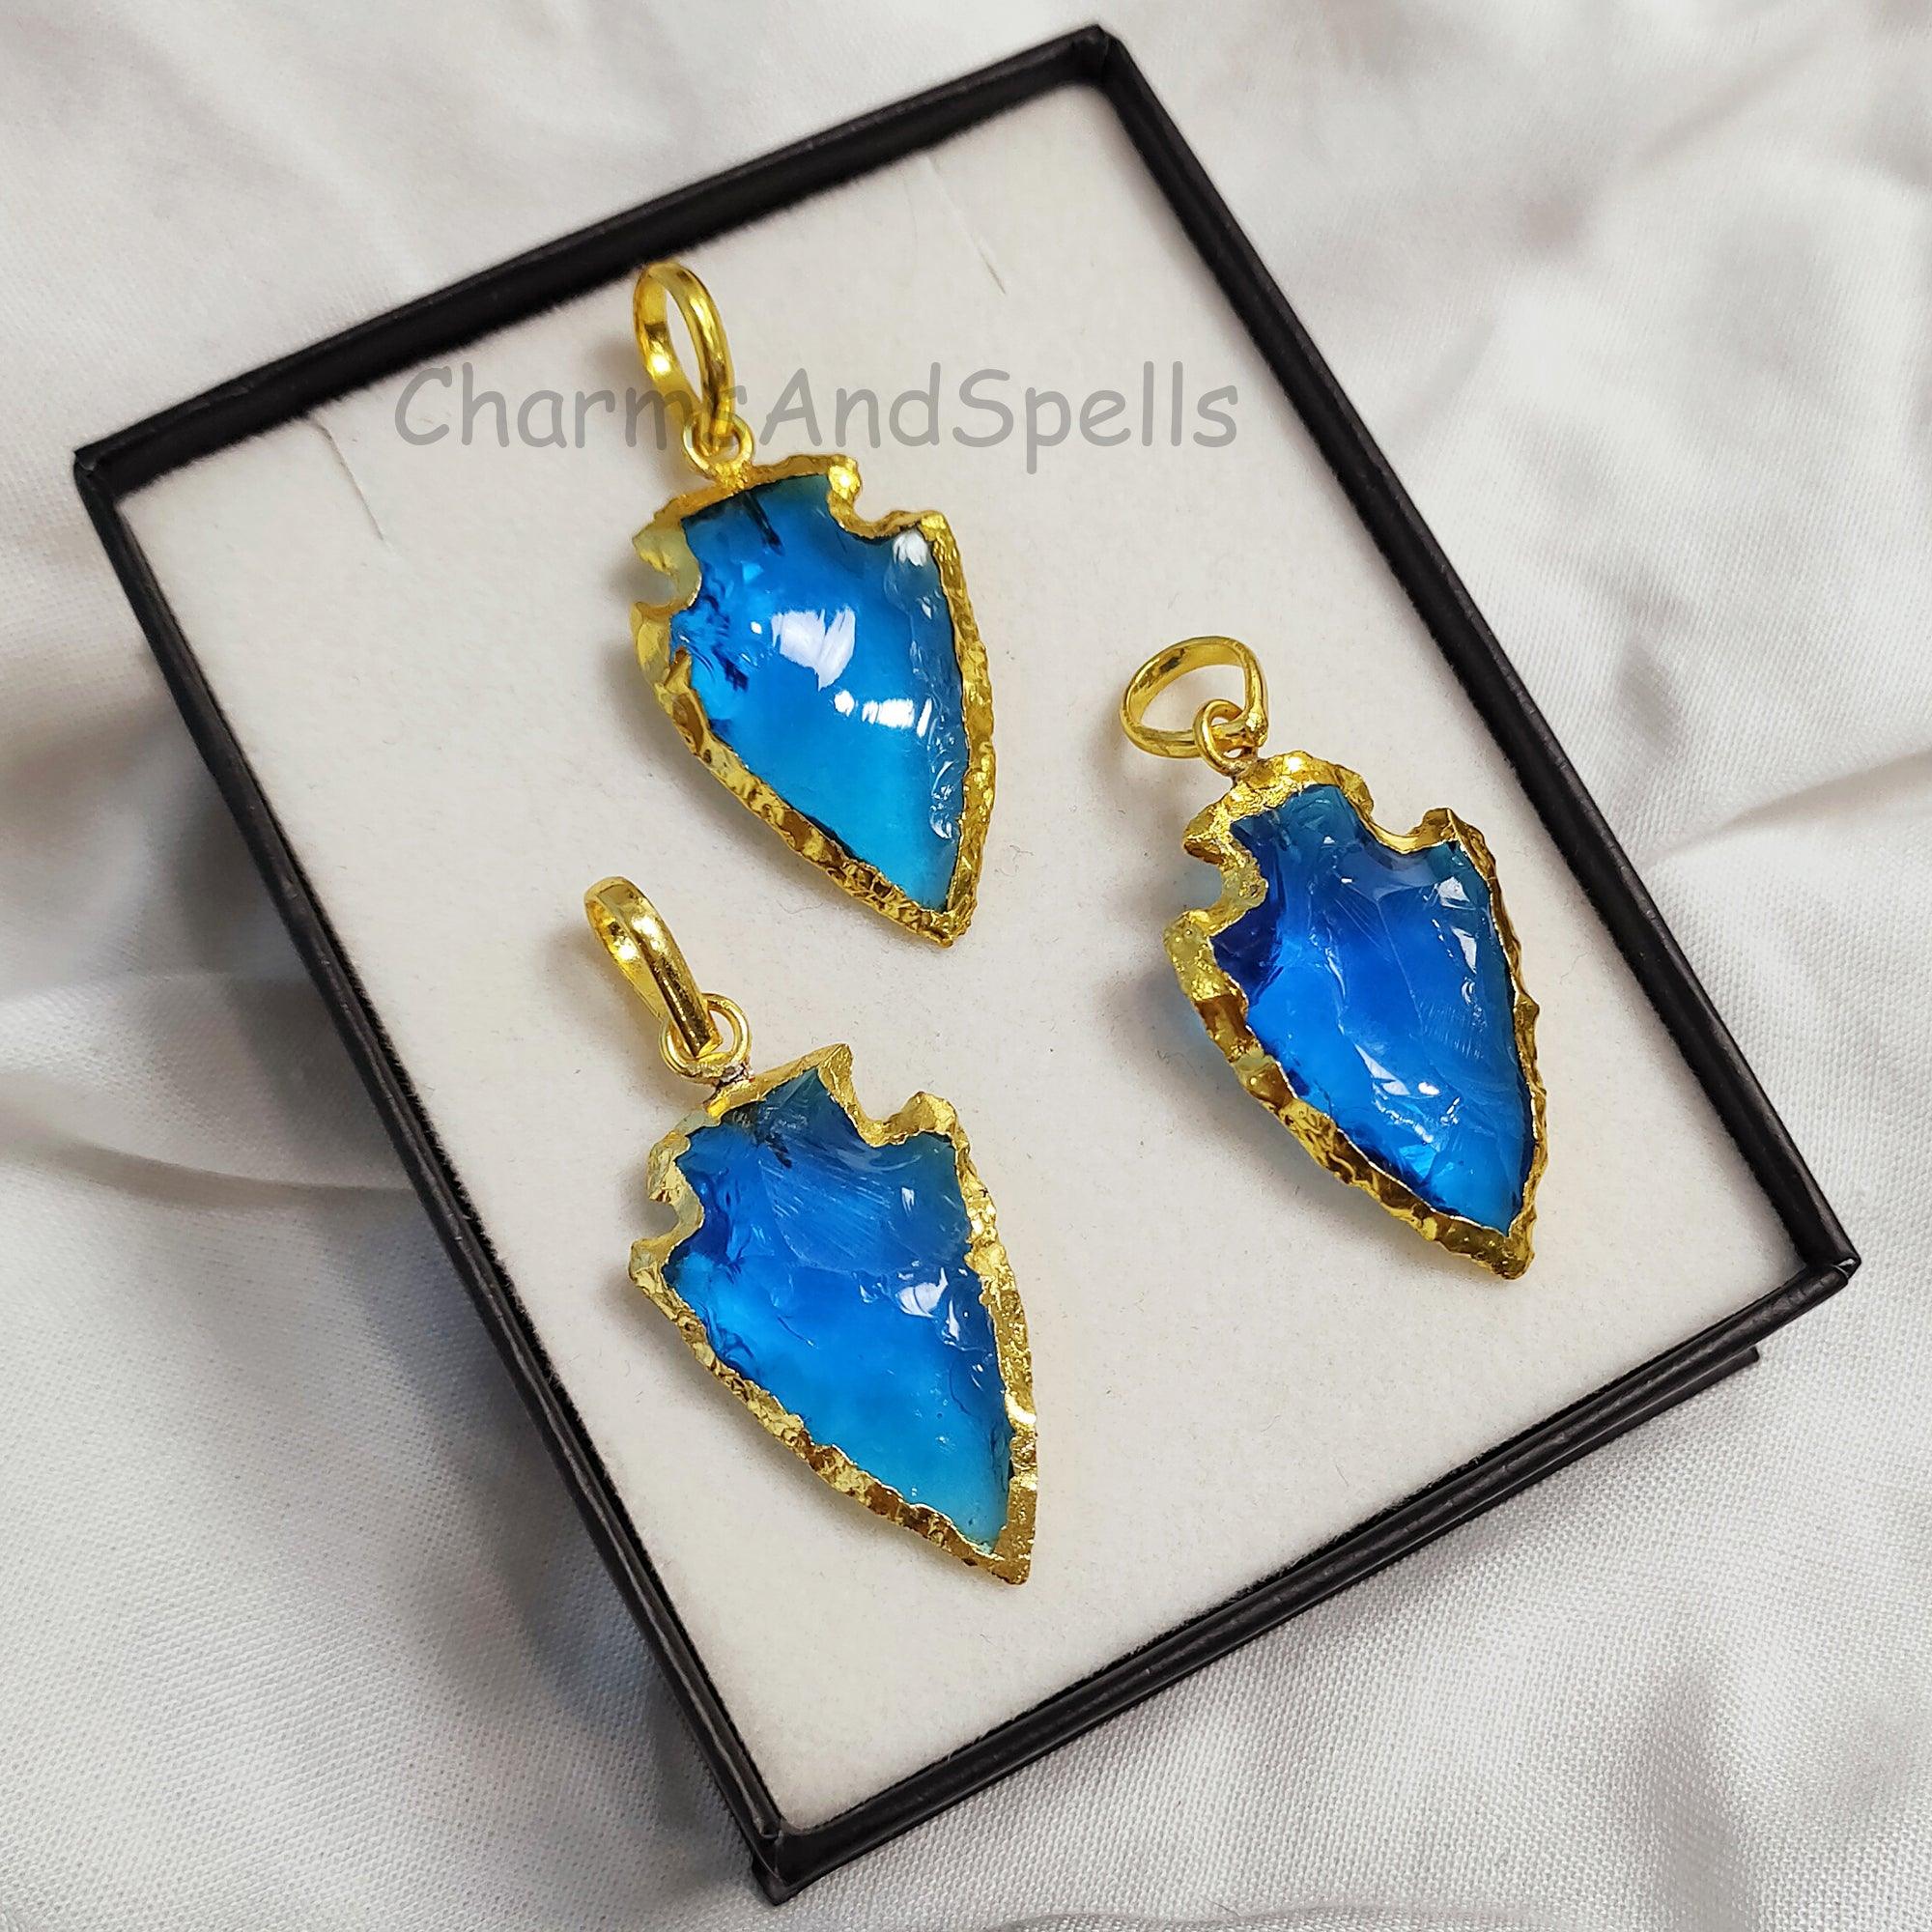 Blue Topaz Quartz Arrowhead Pendant, Gold Electroplated Pendant, Arrow Head Pendant Charm, Arrowhead Jewelry, Gemstone Pendant, Boho Jewelry